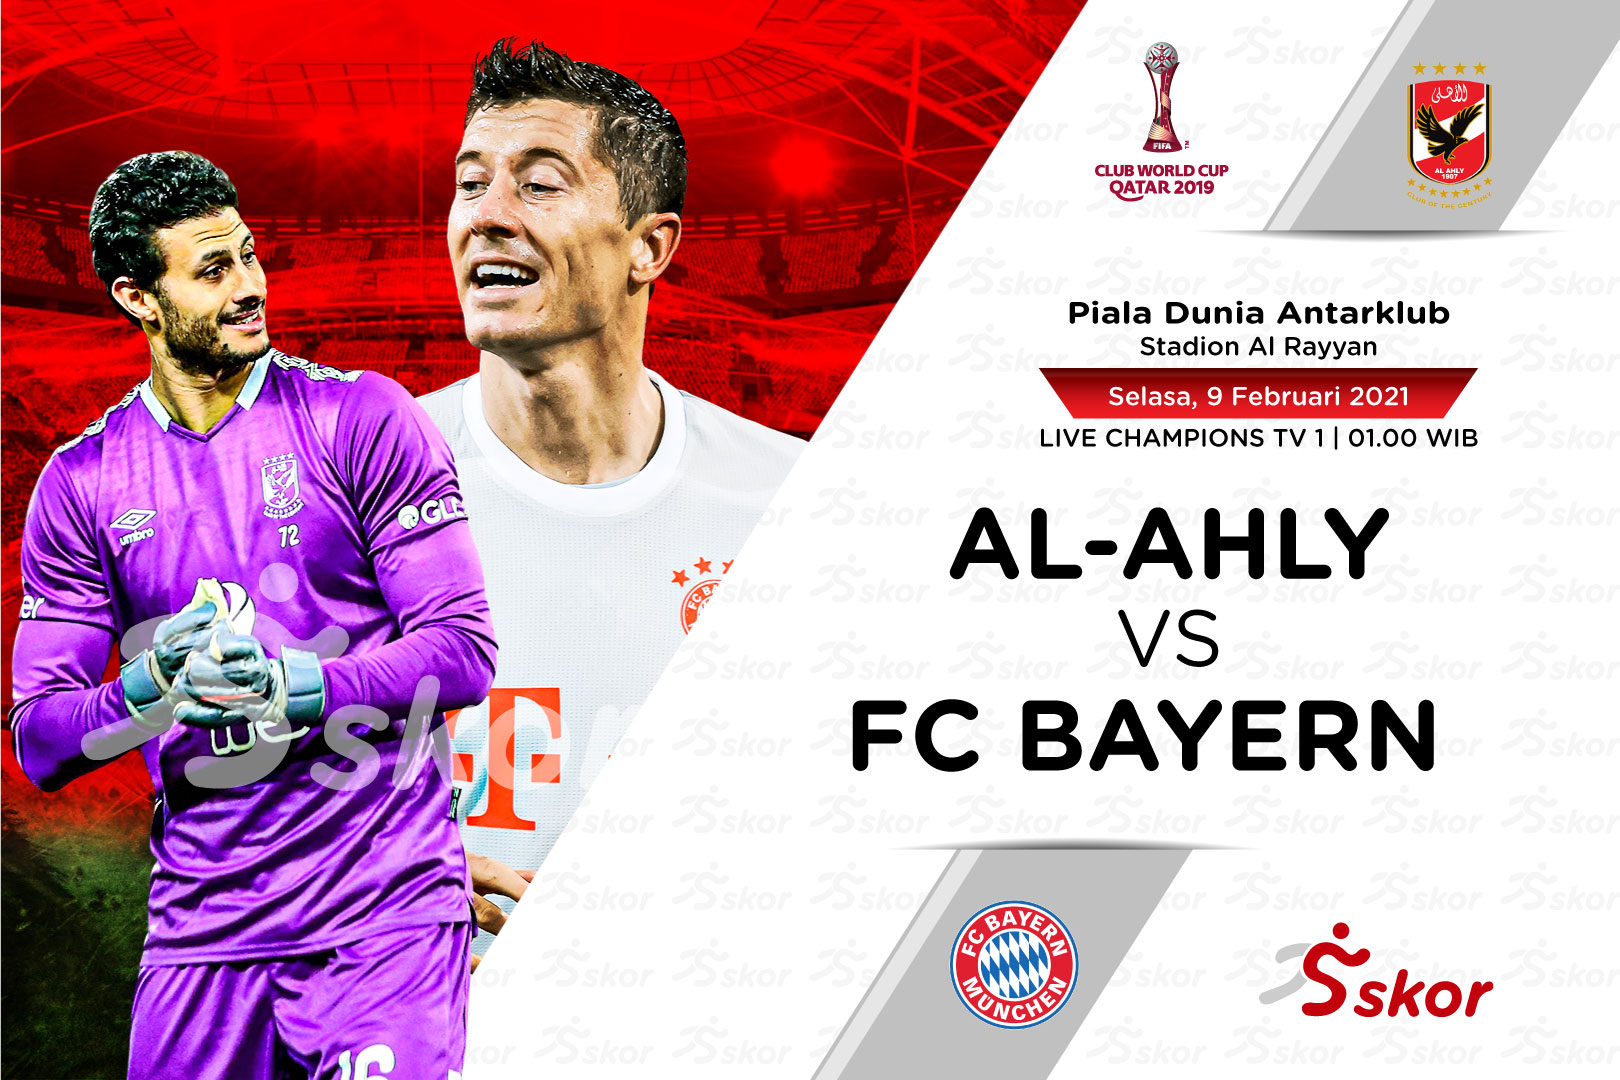 Link Live Streaming Al Ahly vs Bayern Munchen di Piala Dunia Antarklub 2020